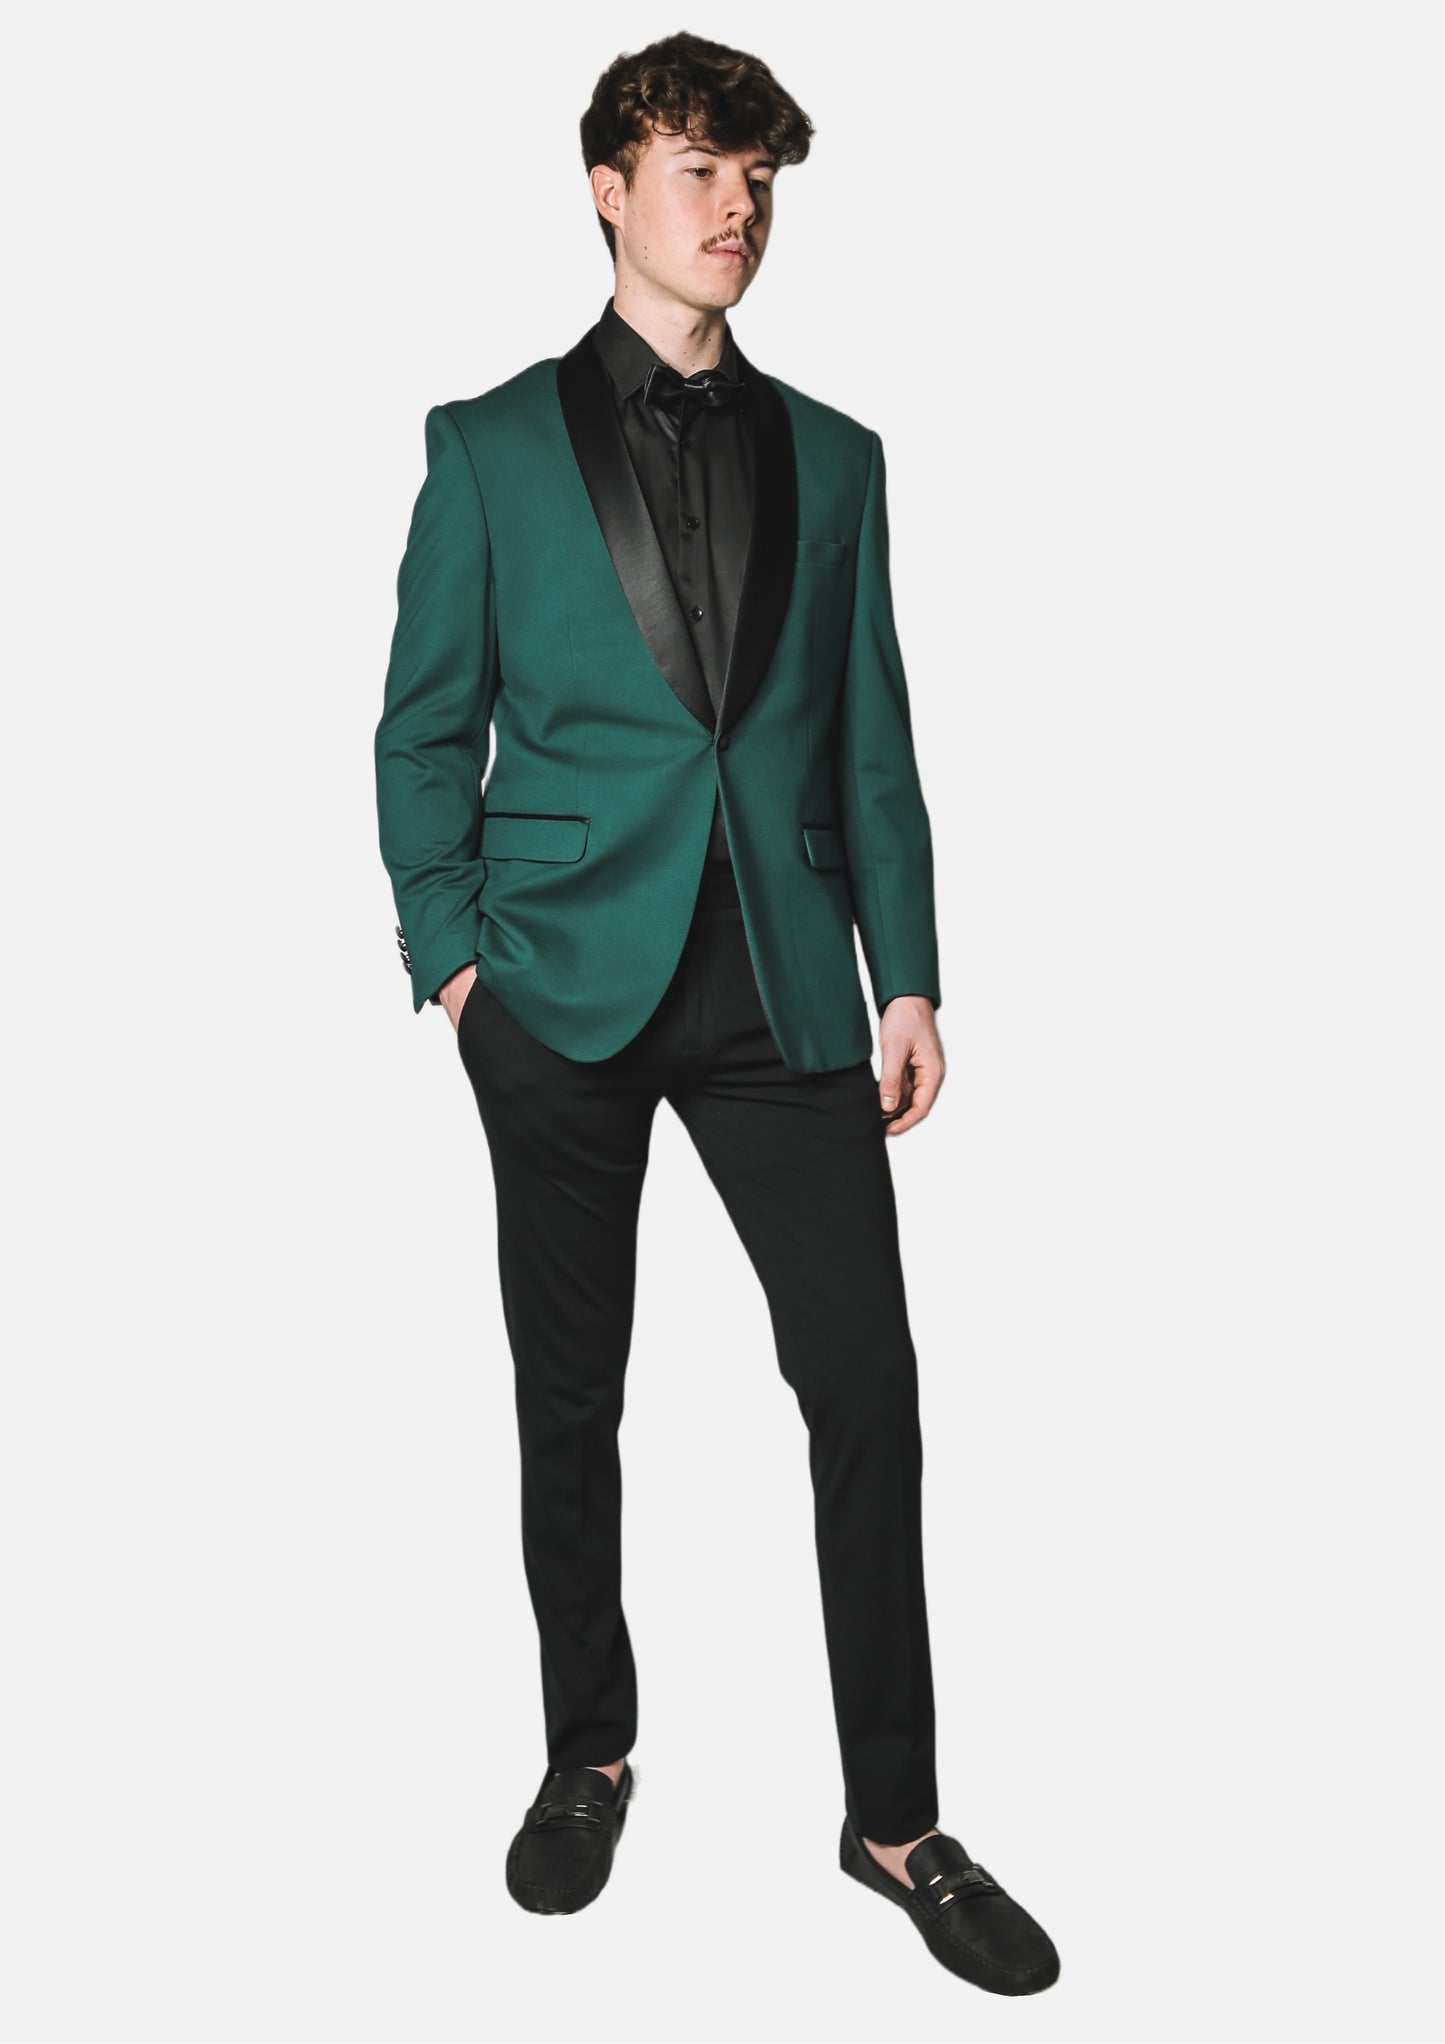 Flex Tailor Emerald Green 4-Way Stretch Tuxedo Jacket  - Sleek Mobility